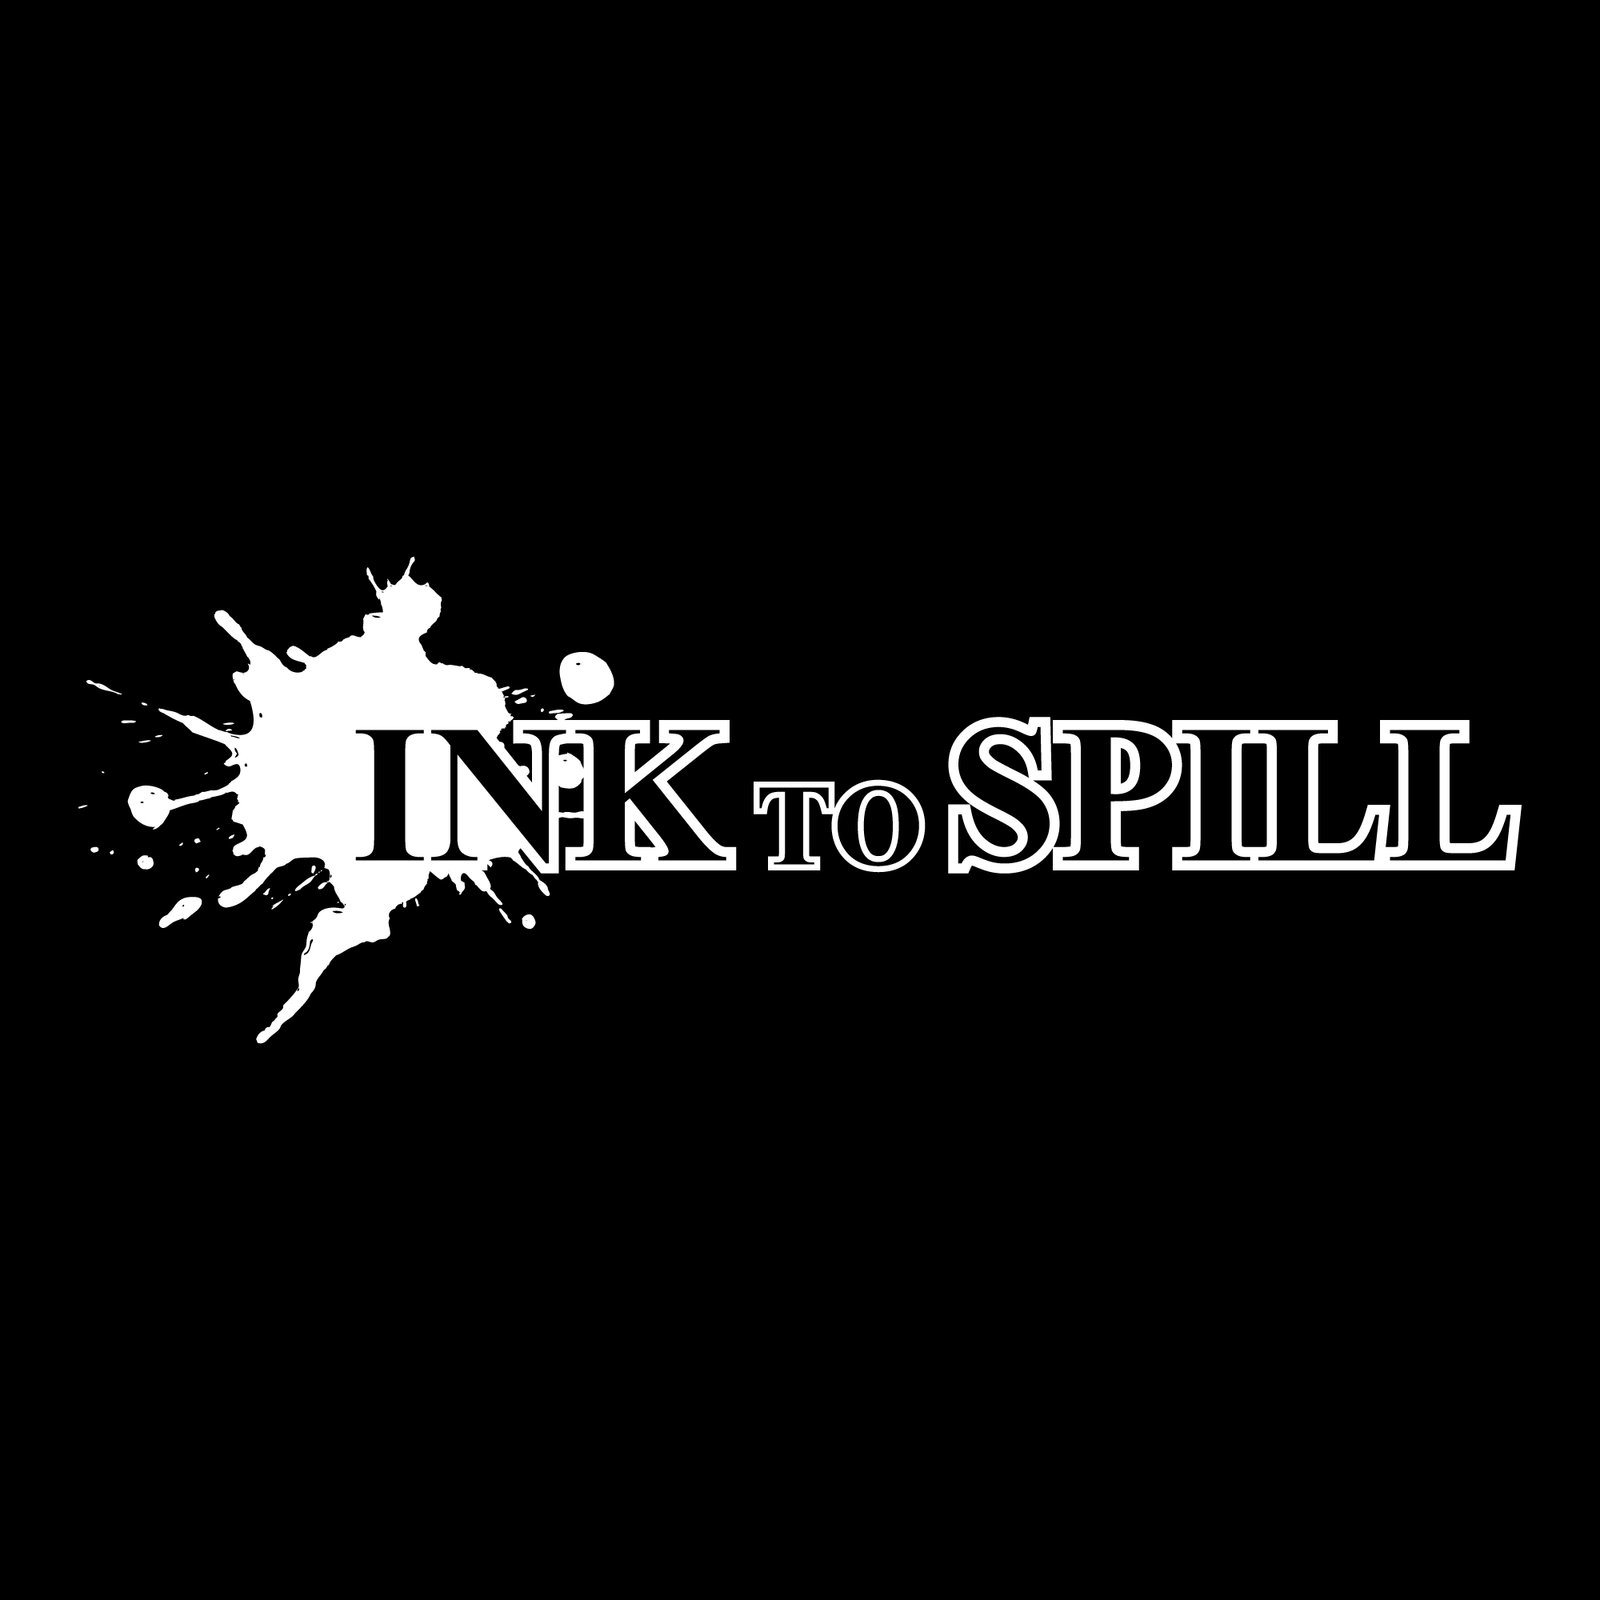 Ink to Spill Logo B142305843009227889658 Black On White One Spoltch